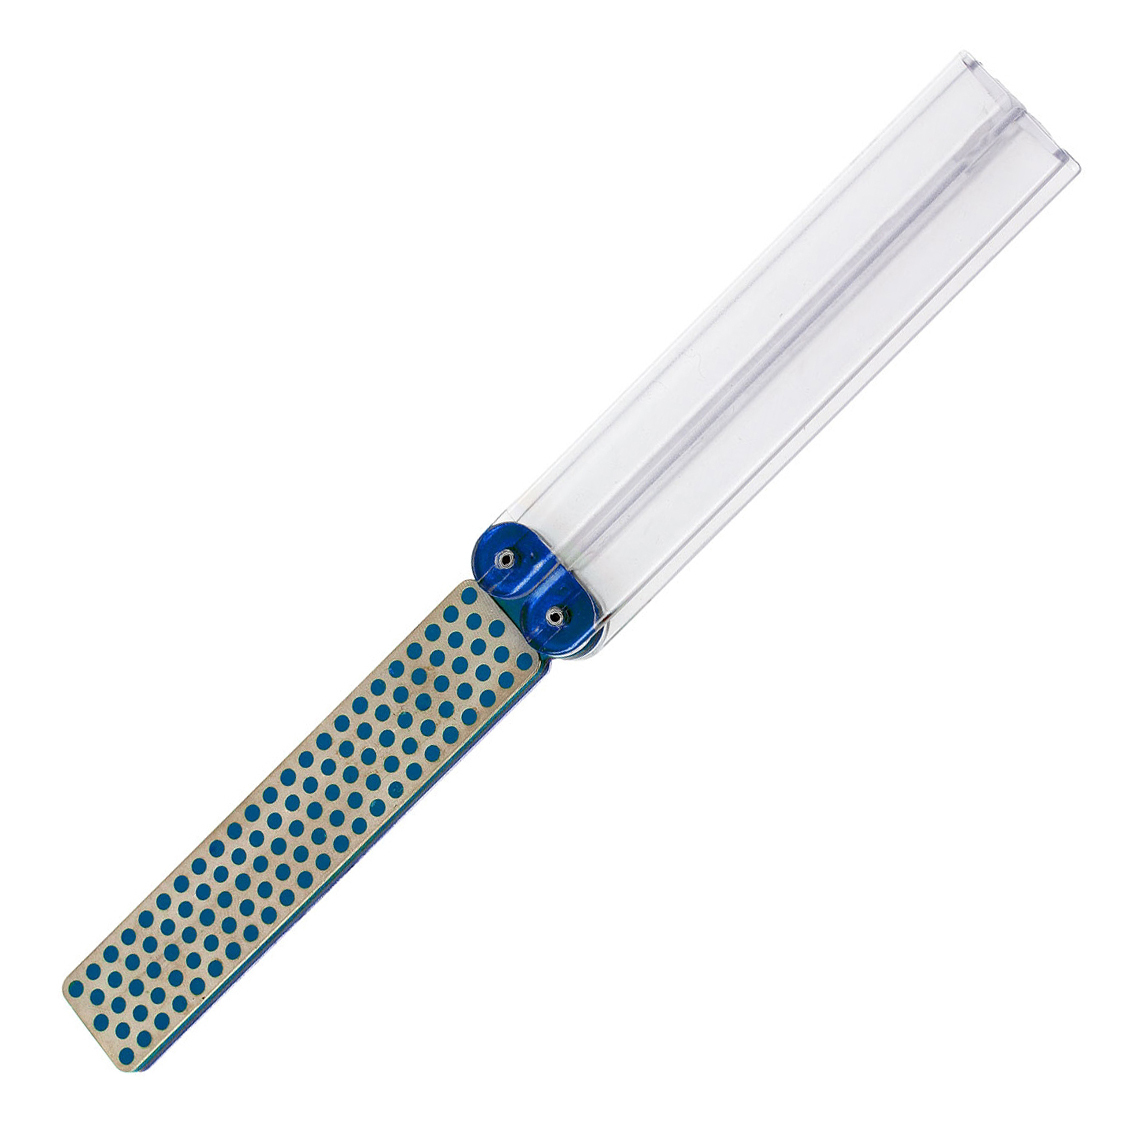 Алмазная точилка - бабочка DMT® Diafold Coarse, 325 mesh, 45 micron алмазная точилка для ножей dmt® coarse 325 mesh 45 micron